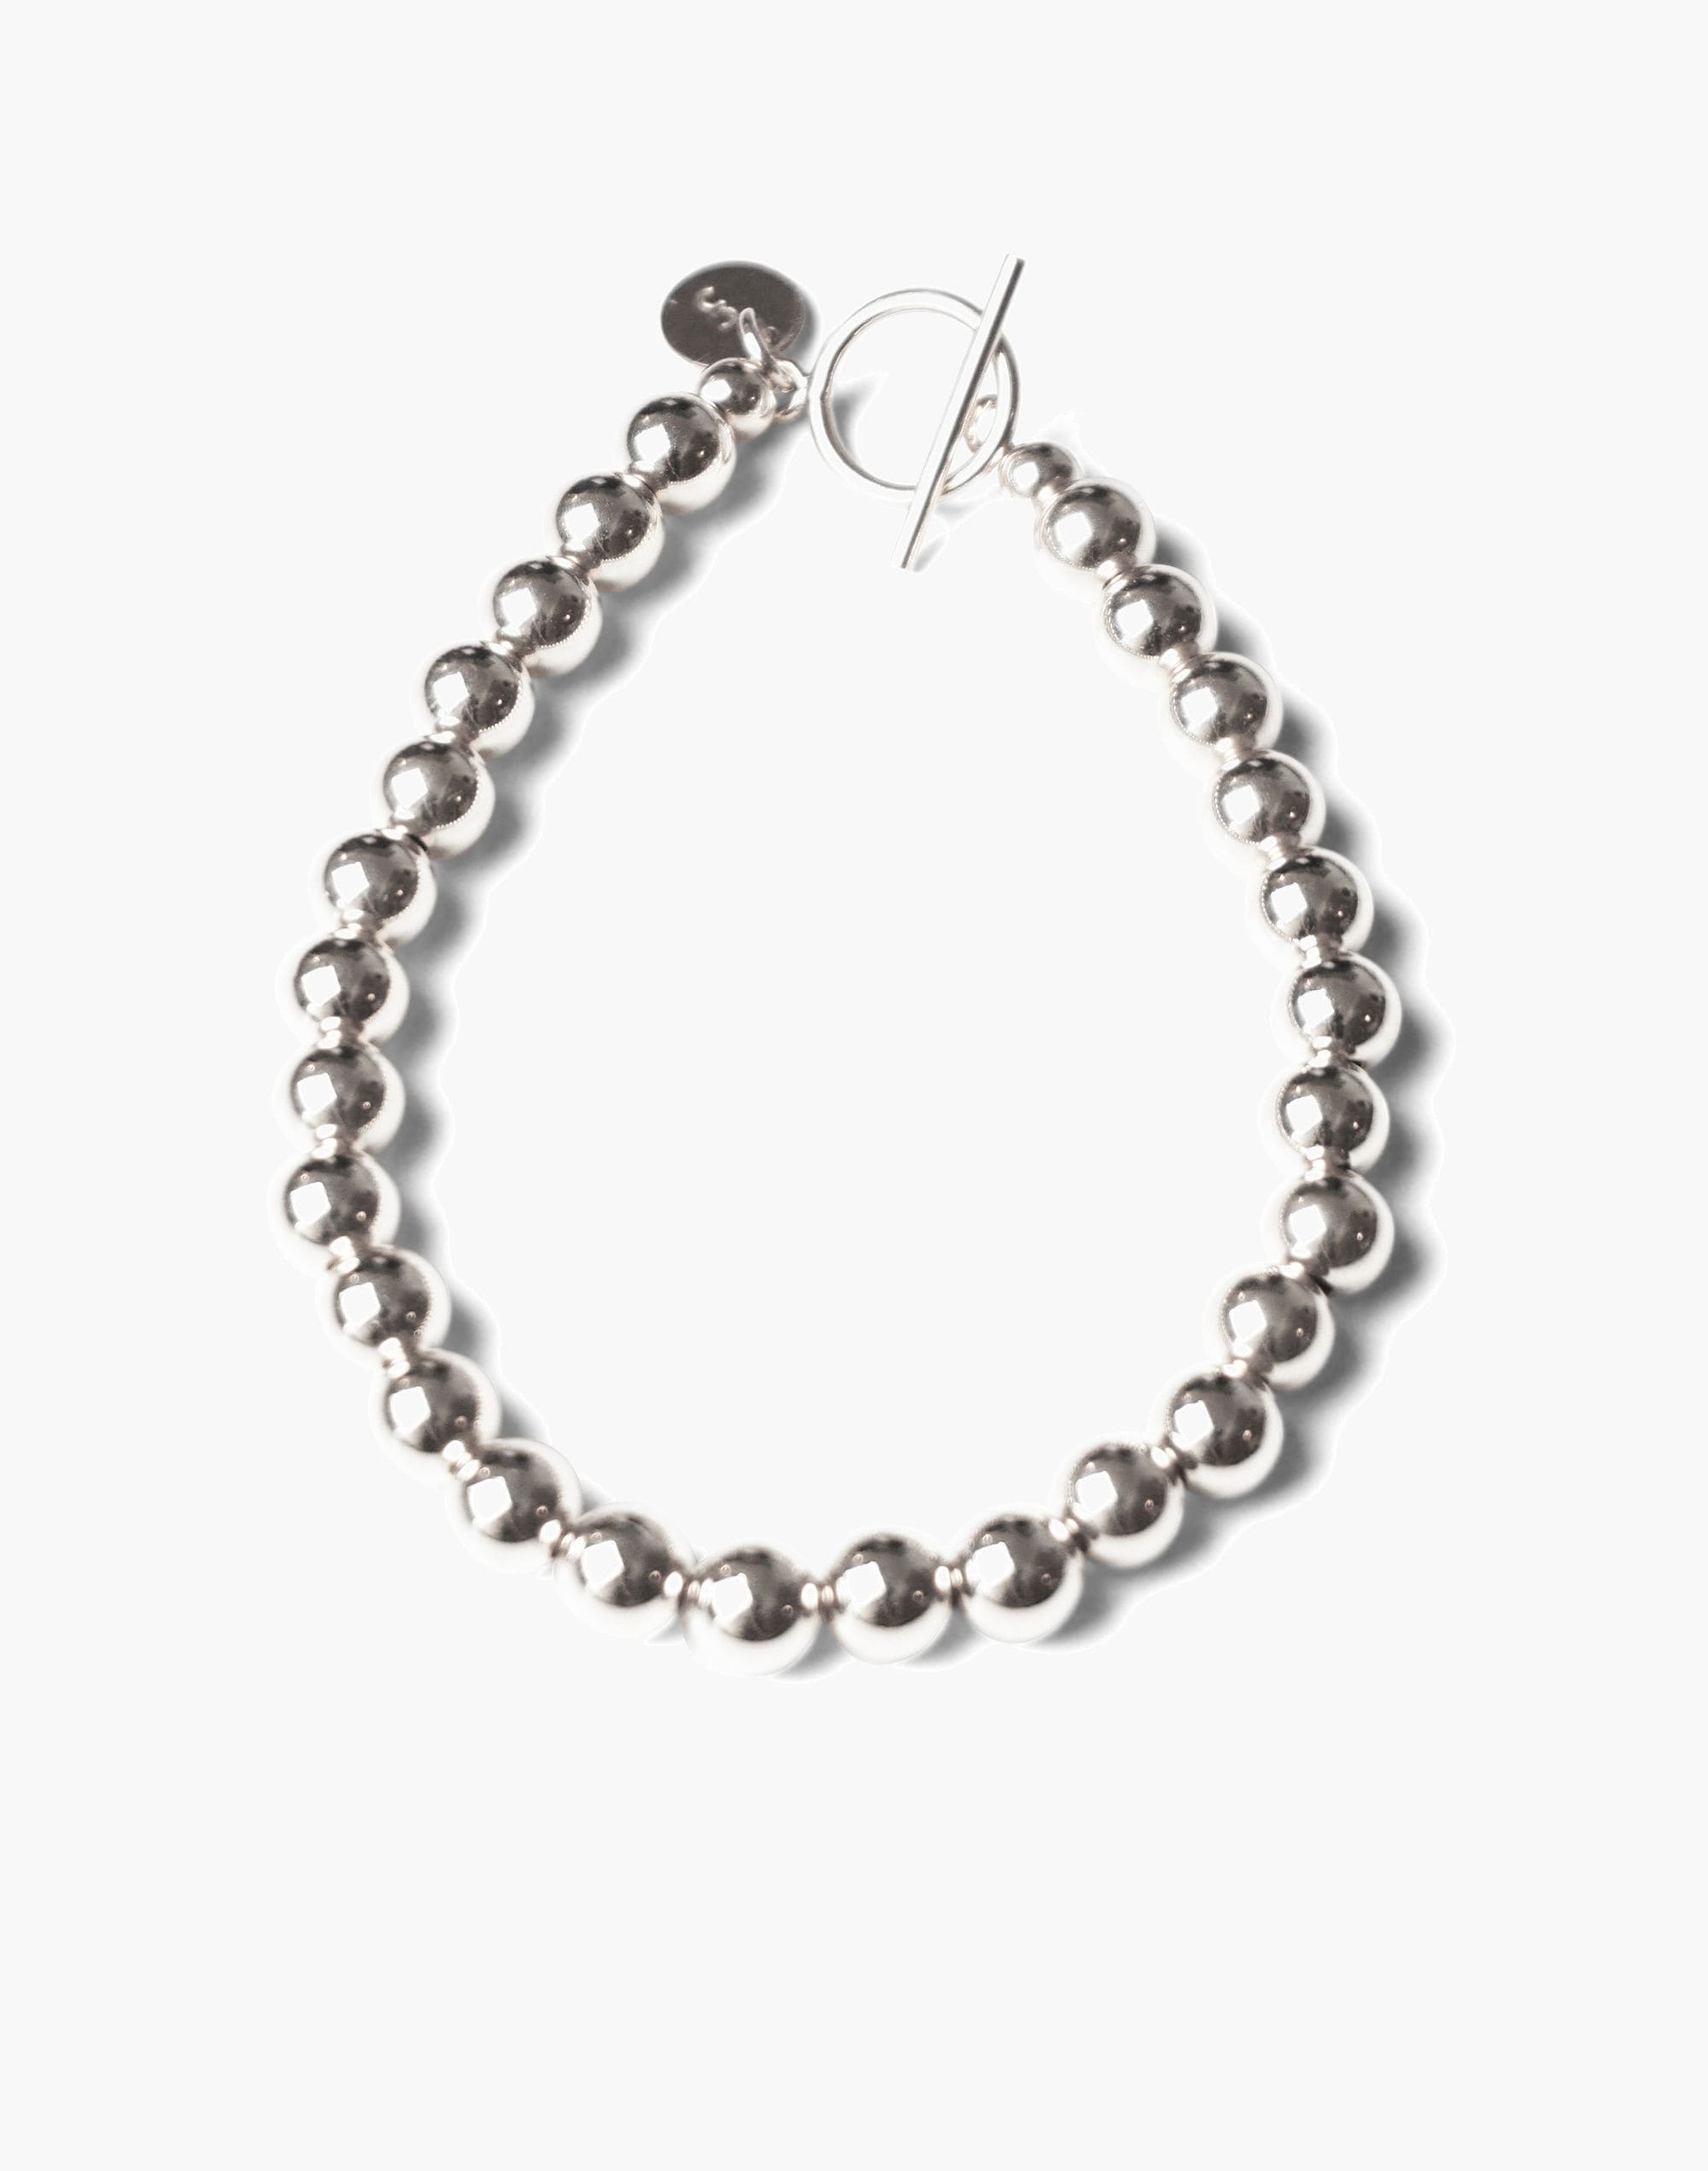 Charlotte Cauwe Studio Bead Bracelet in Sterling Silver